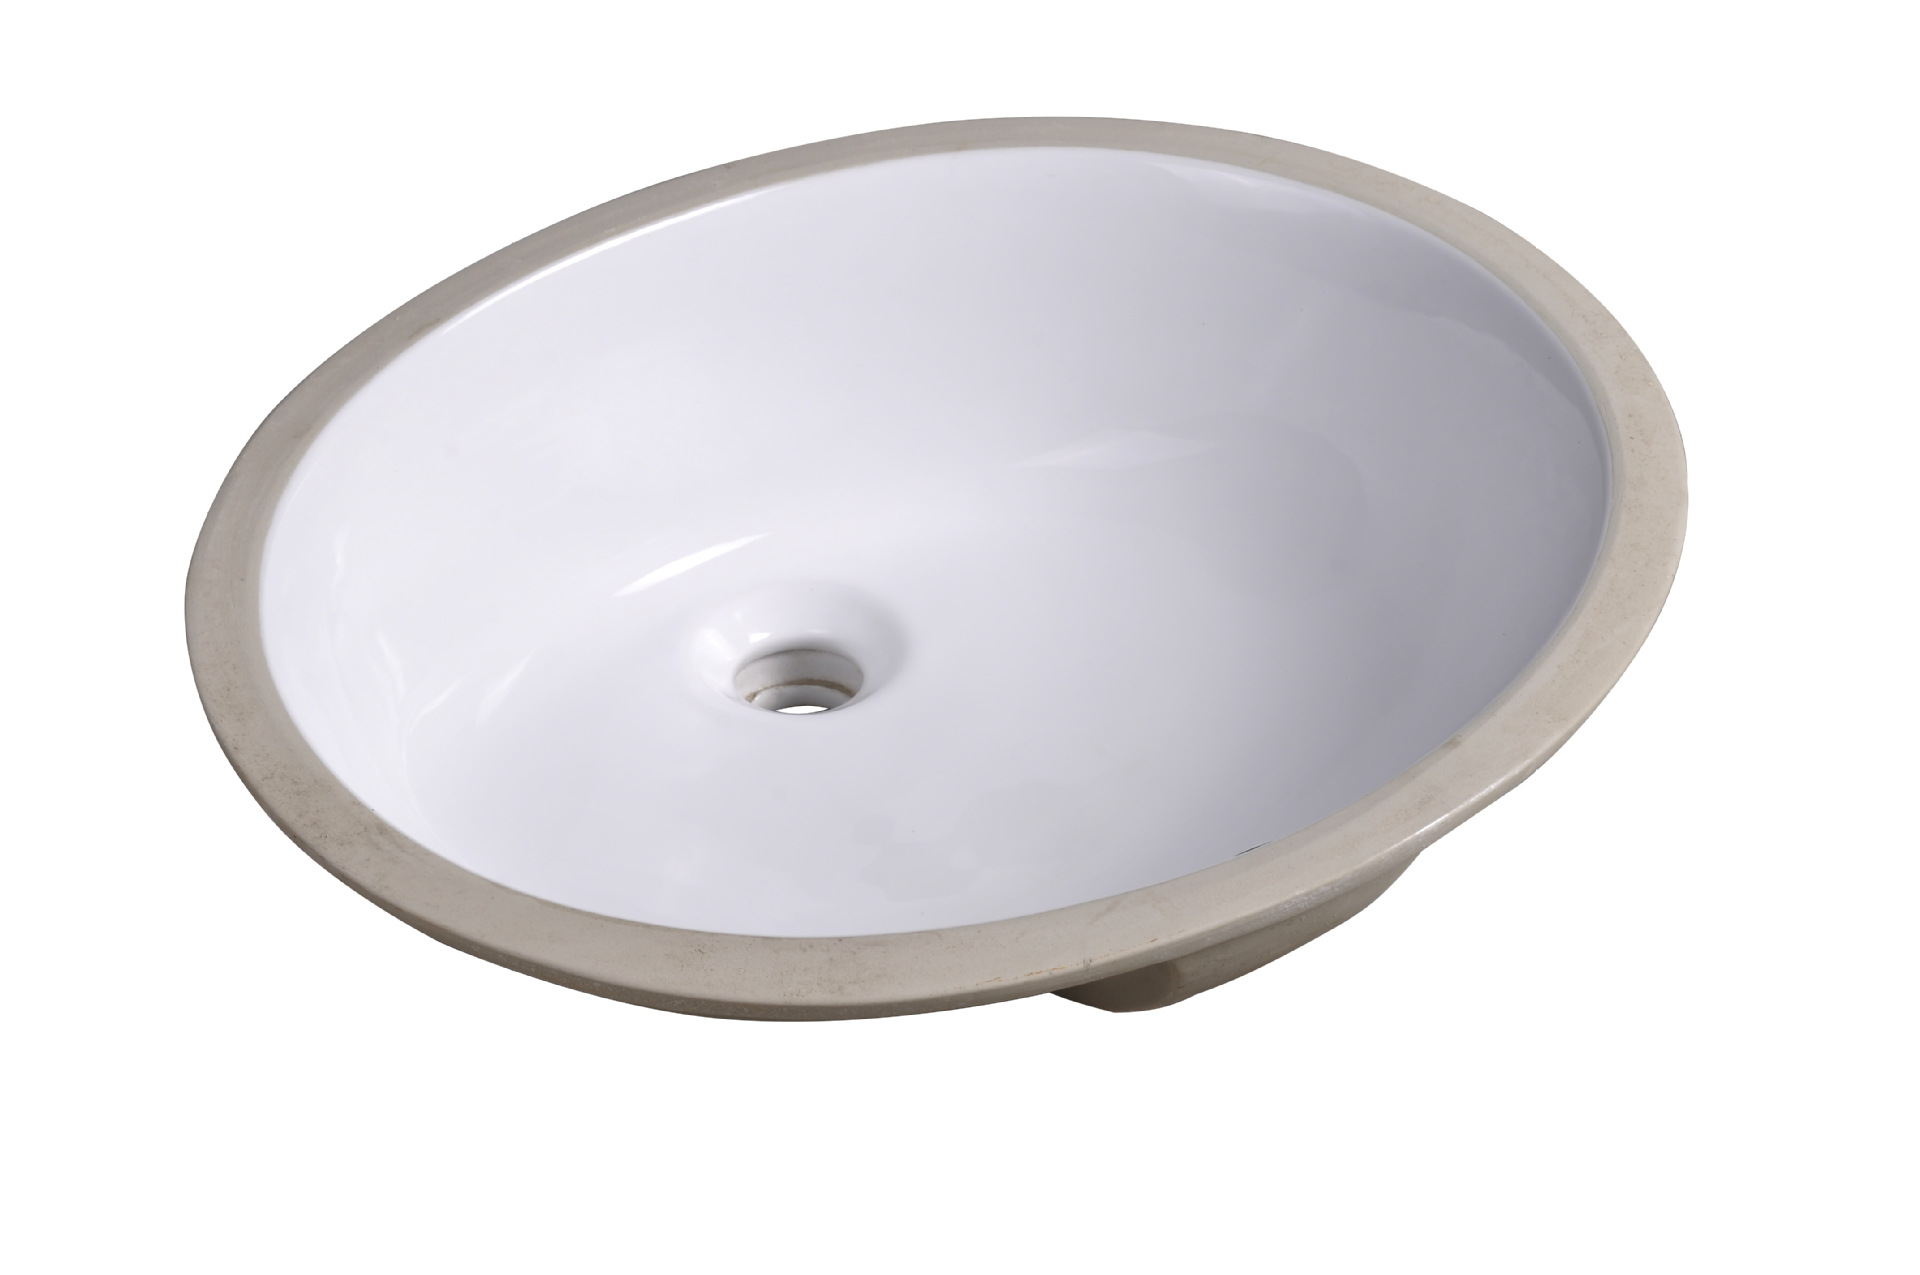 Oval ceramic undermount sink for bathroom